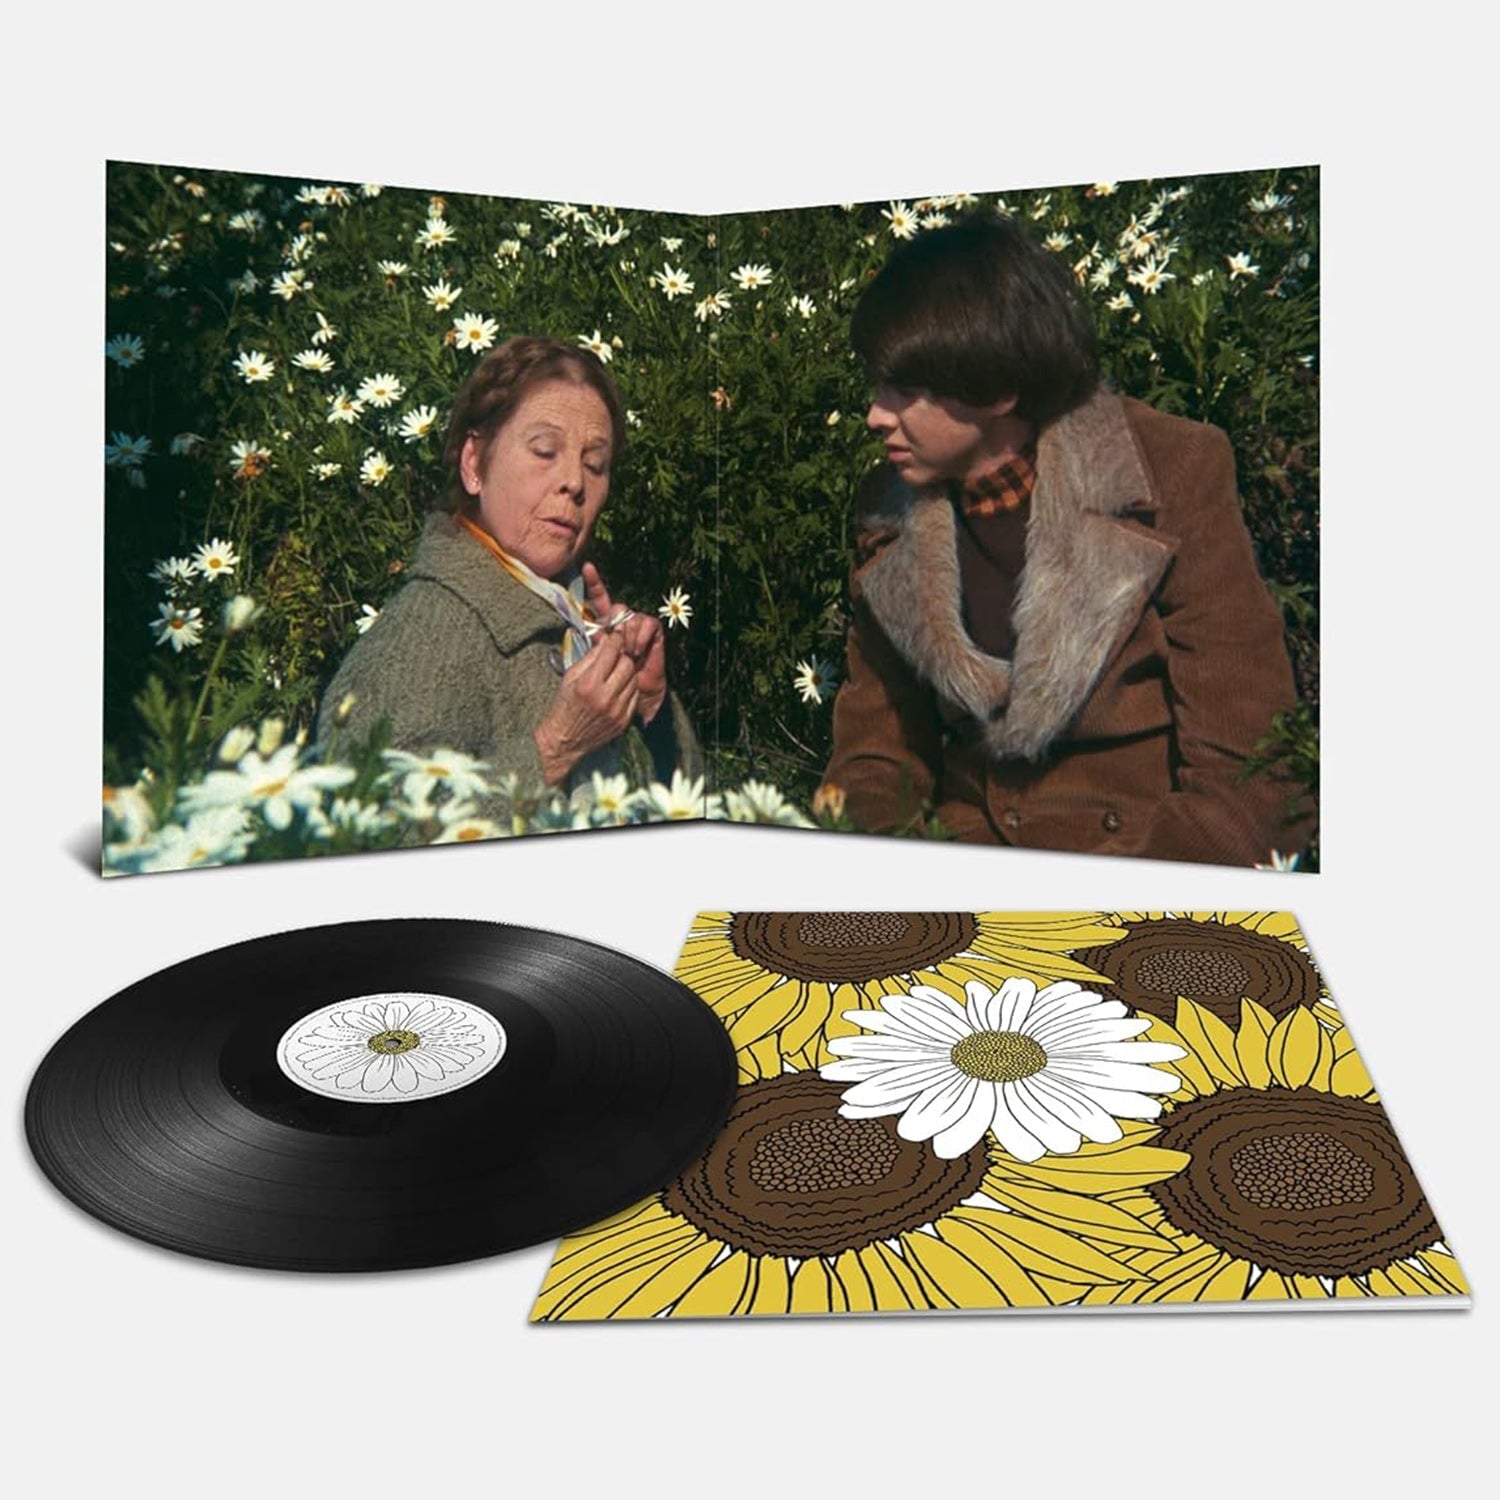 Harold And Maude (Original Motion Picture Soundtrack) (Vinyl LP)